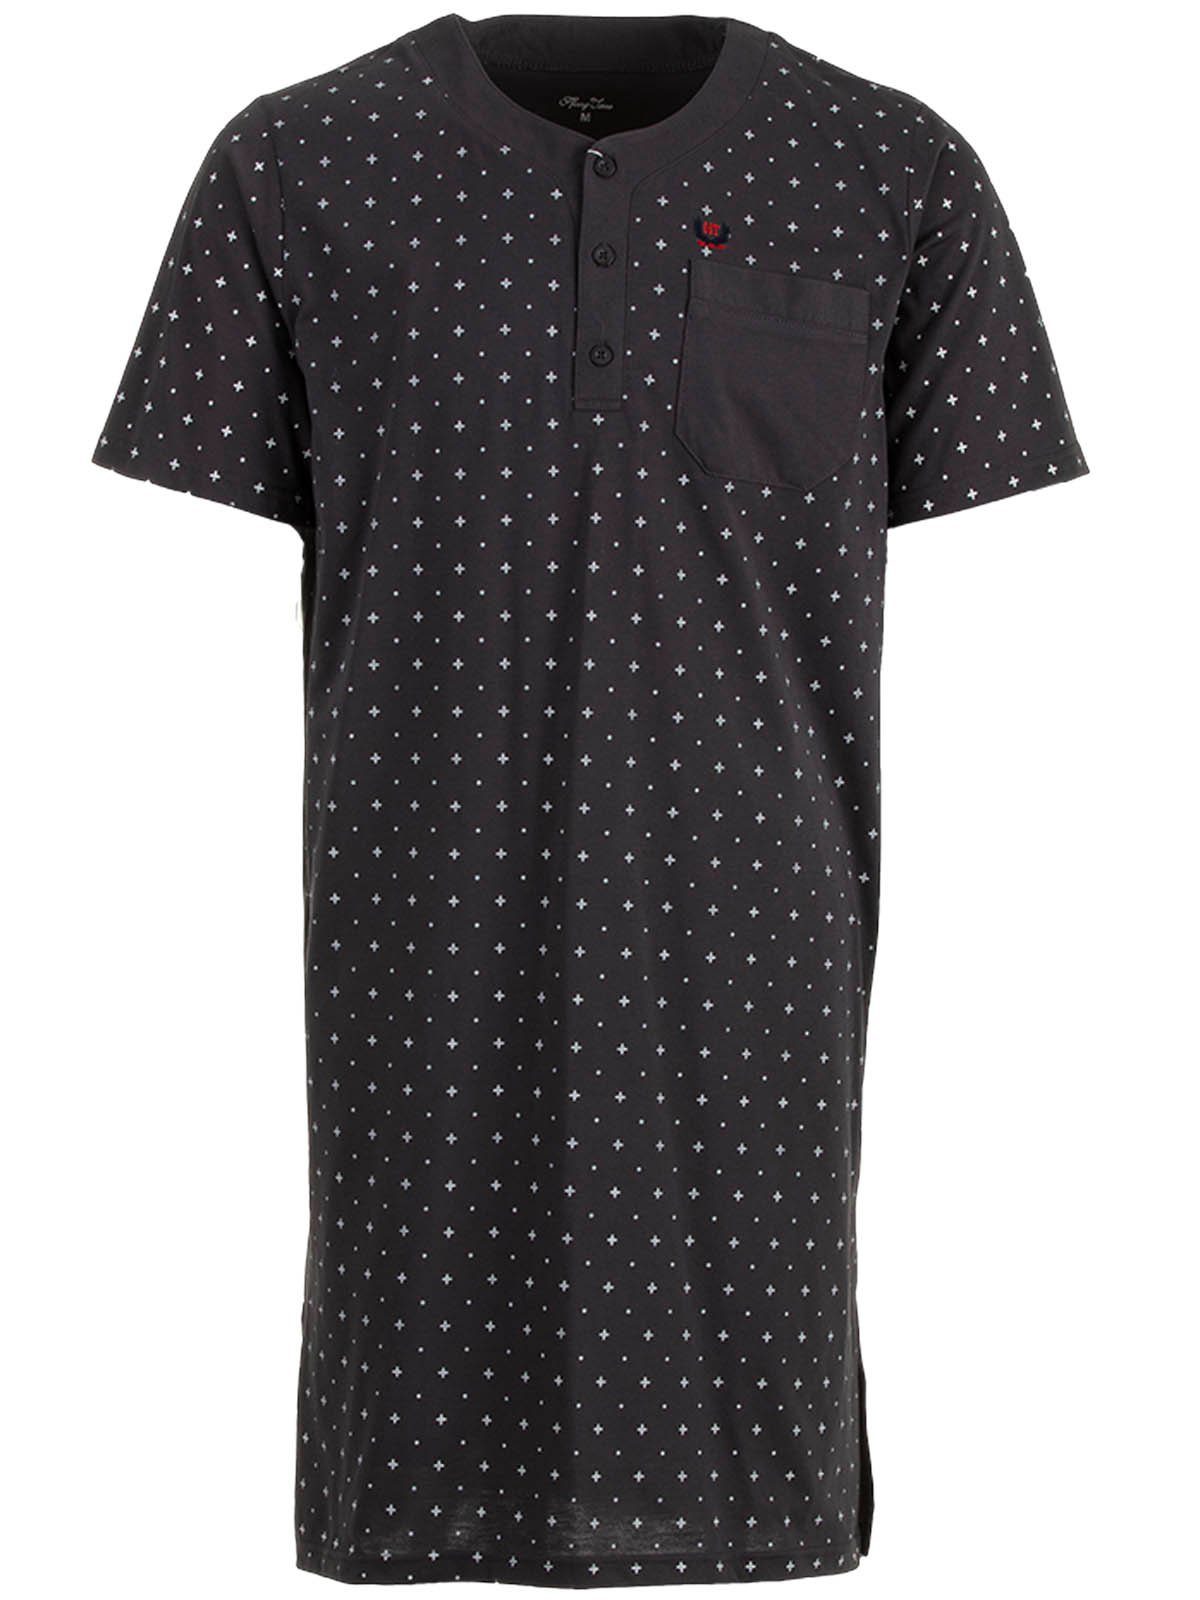 Henry Terre Nachthemd Nachthemd Kurzarm - Punkte Kreuz anthrazit